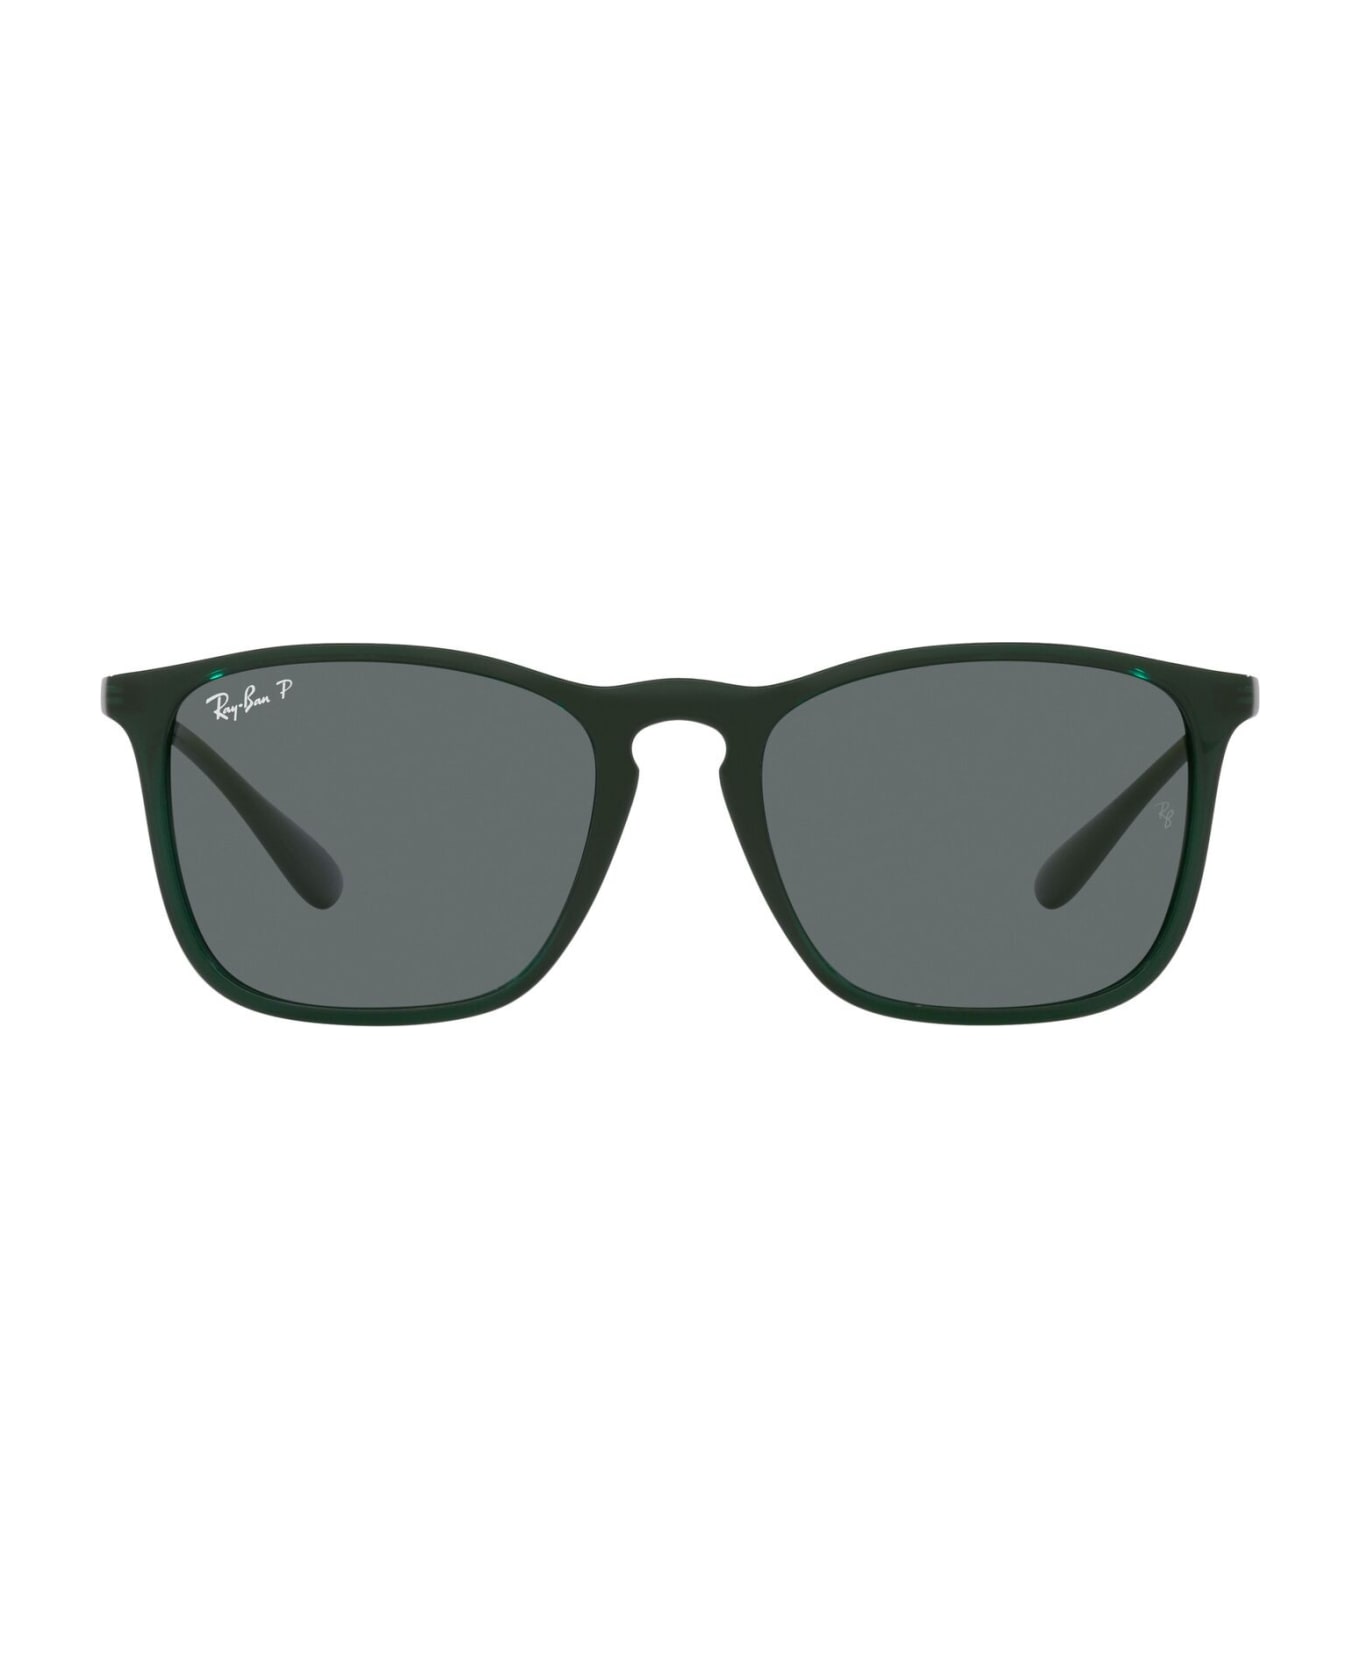 Ray-Ban Eyewear - Verde/Grigio